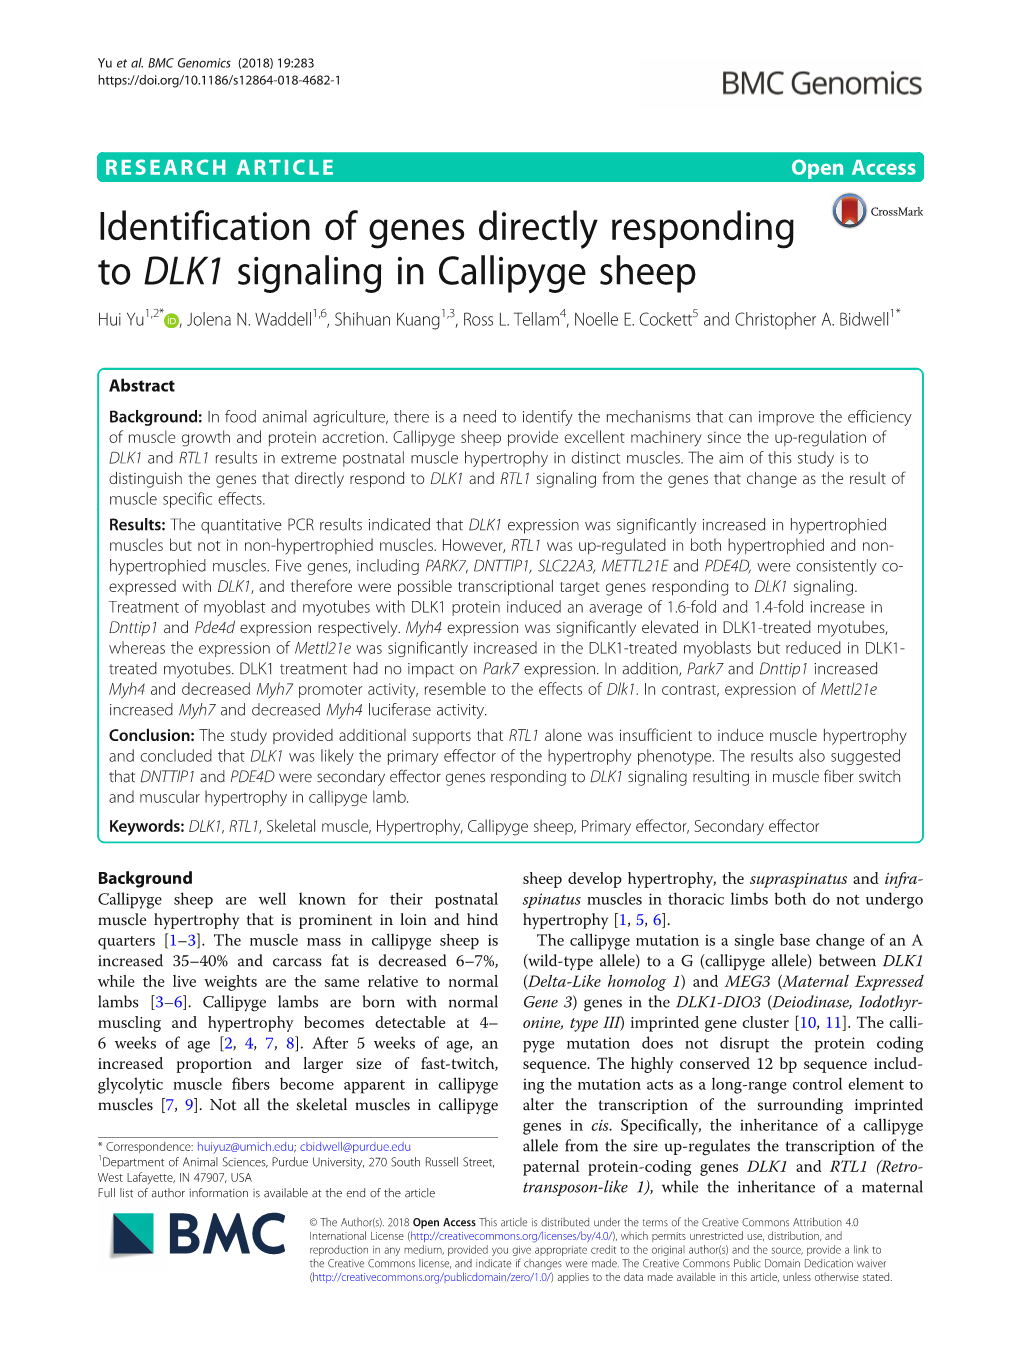 Identification of Genes Directly Responding to DLK1 Signaling in Callipyge Sheep Hui Yu1,2* ,Jolenan.Waddell1,6, Shihuan Kuang1,3, Ross L